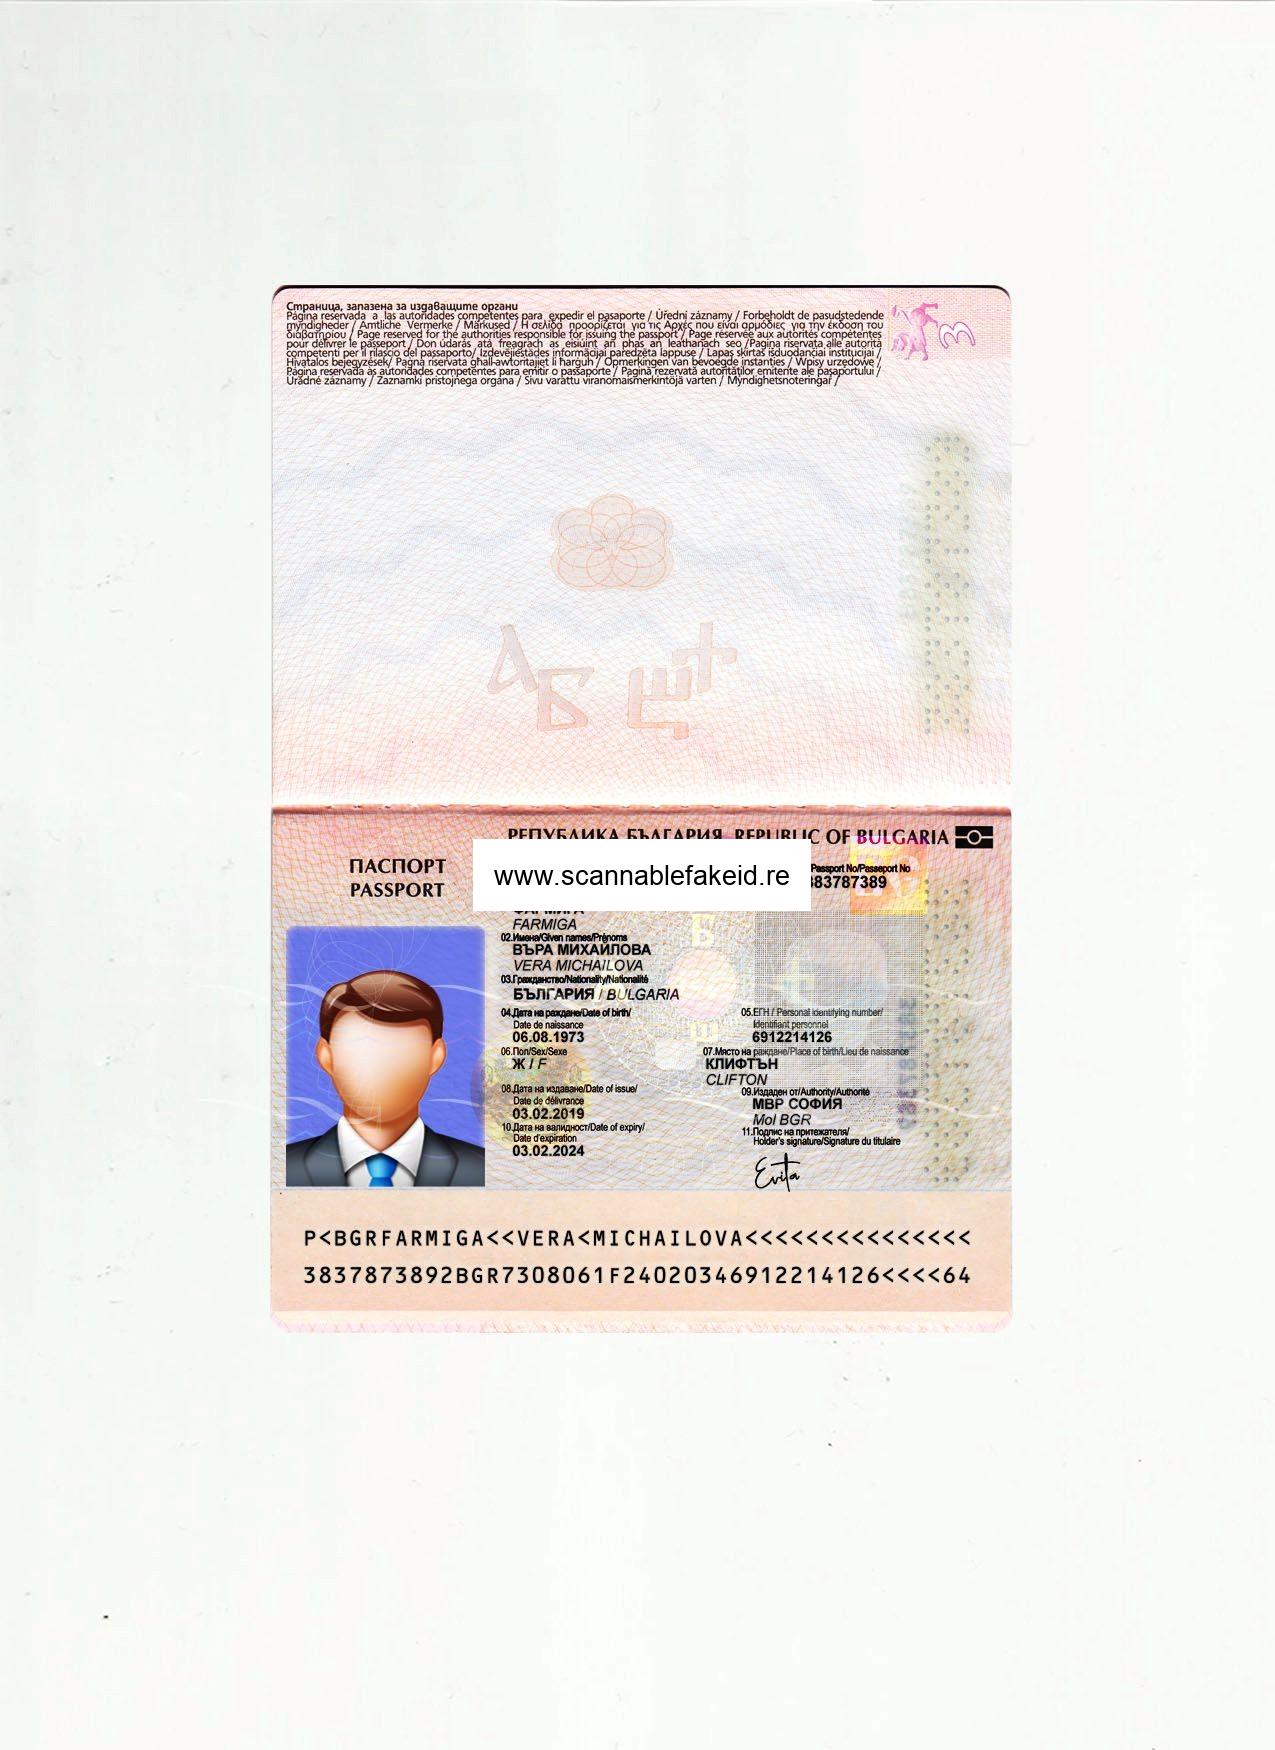 Portugal Fake Passport - Buy Scannable Fake Id Online - Fake ID Website